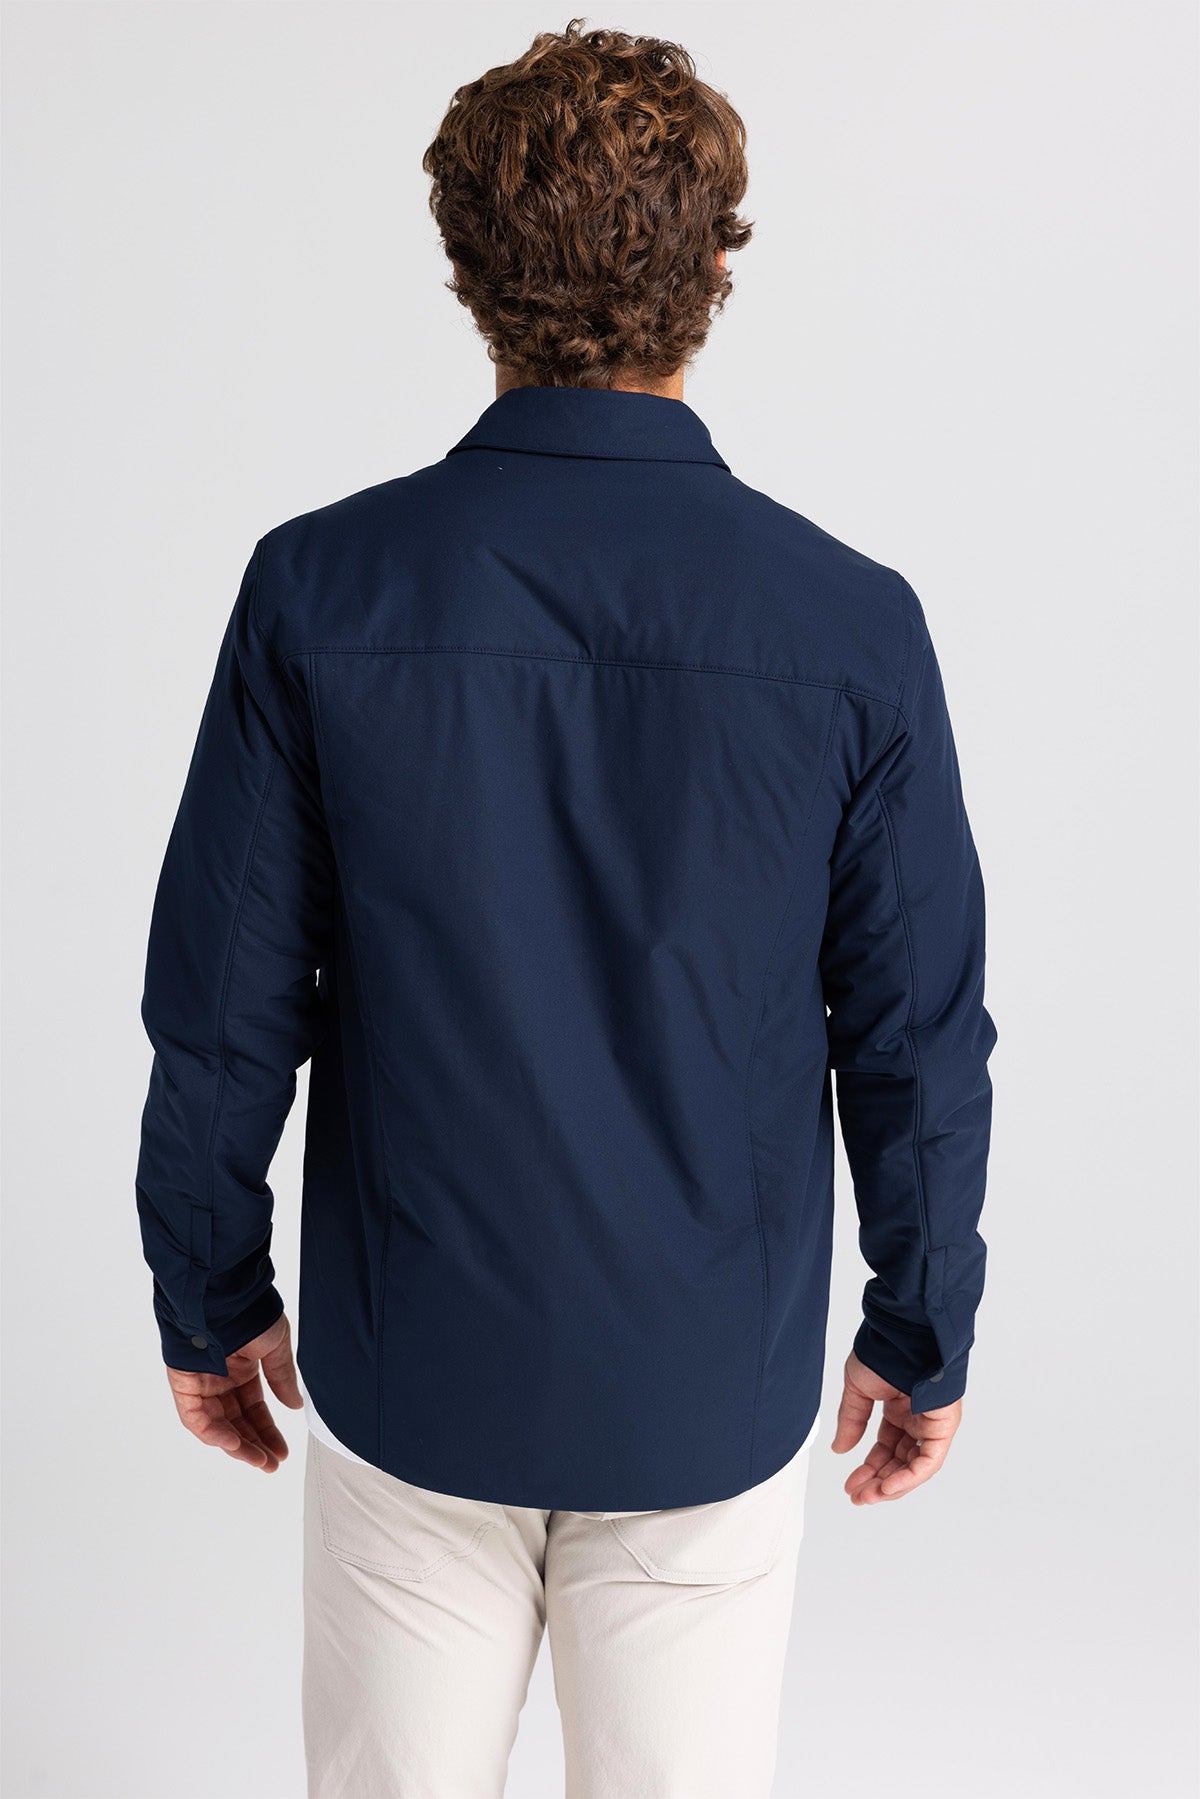 AirLoft Shirt Jacket - Navy
